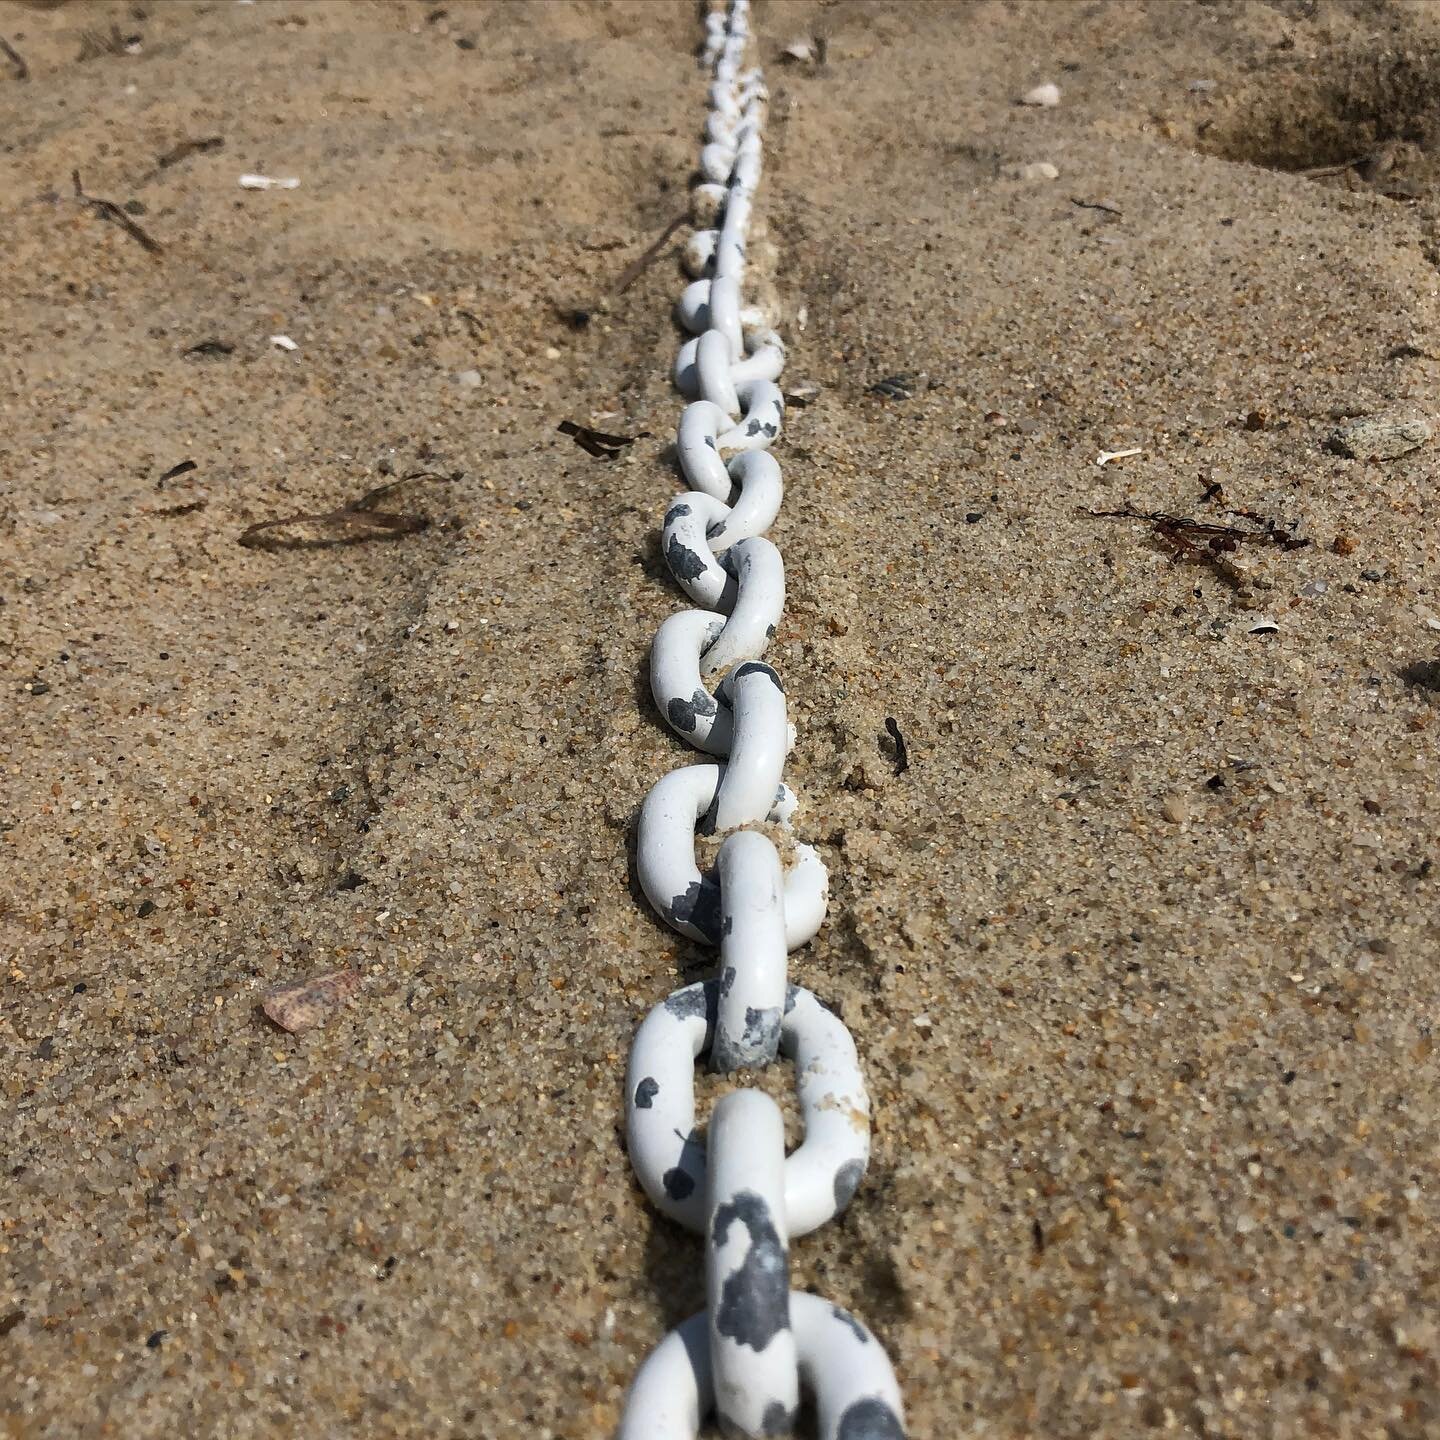 Plastic coated metal chain in sand #plasticcoatedworld